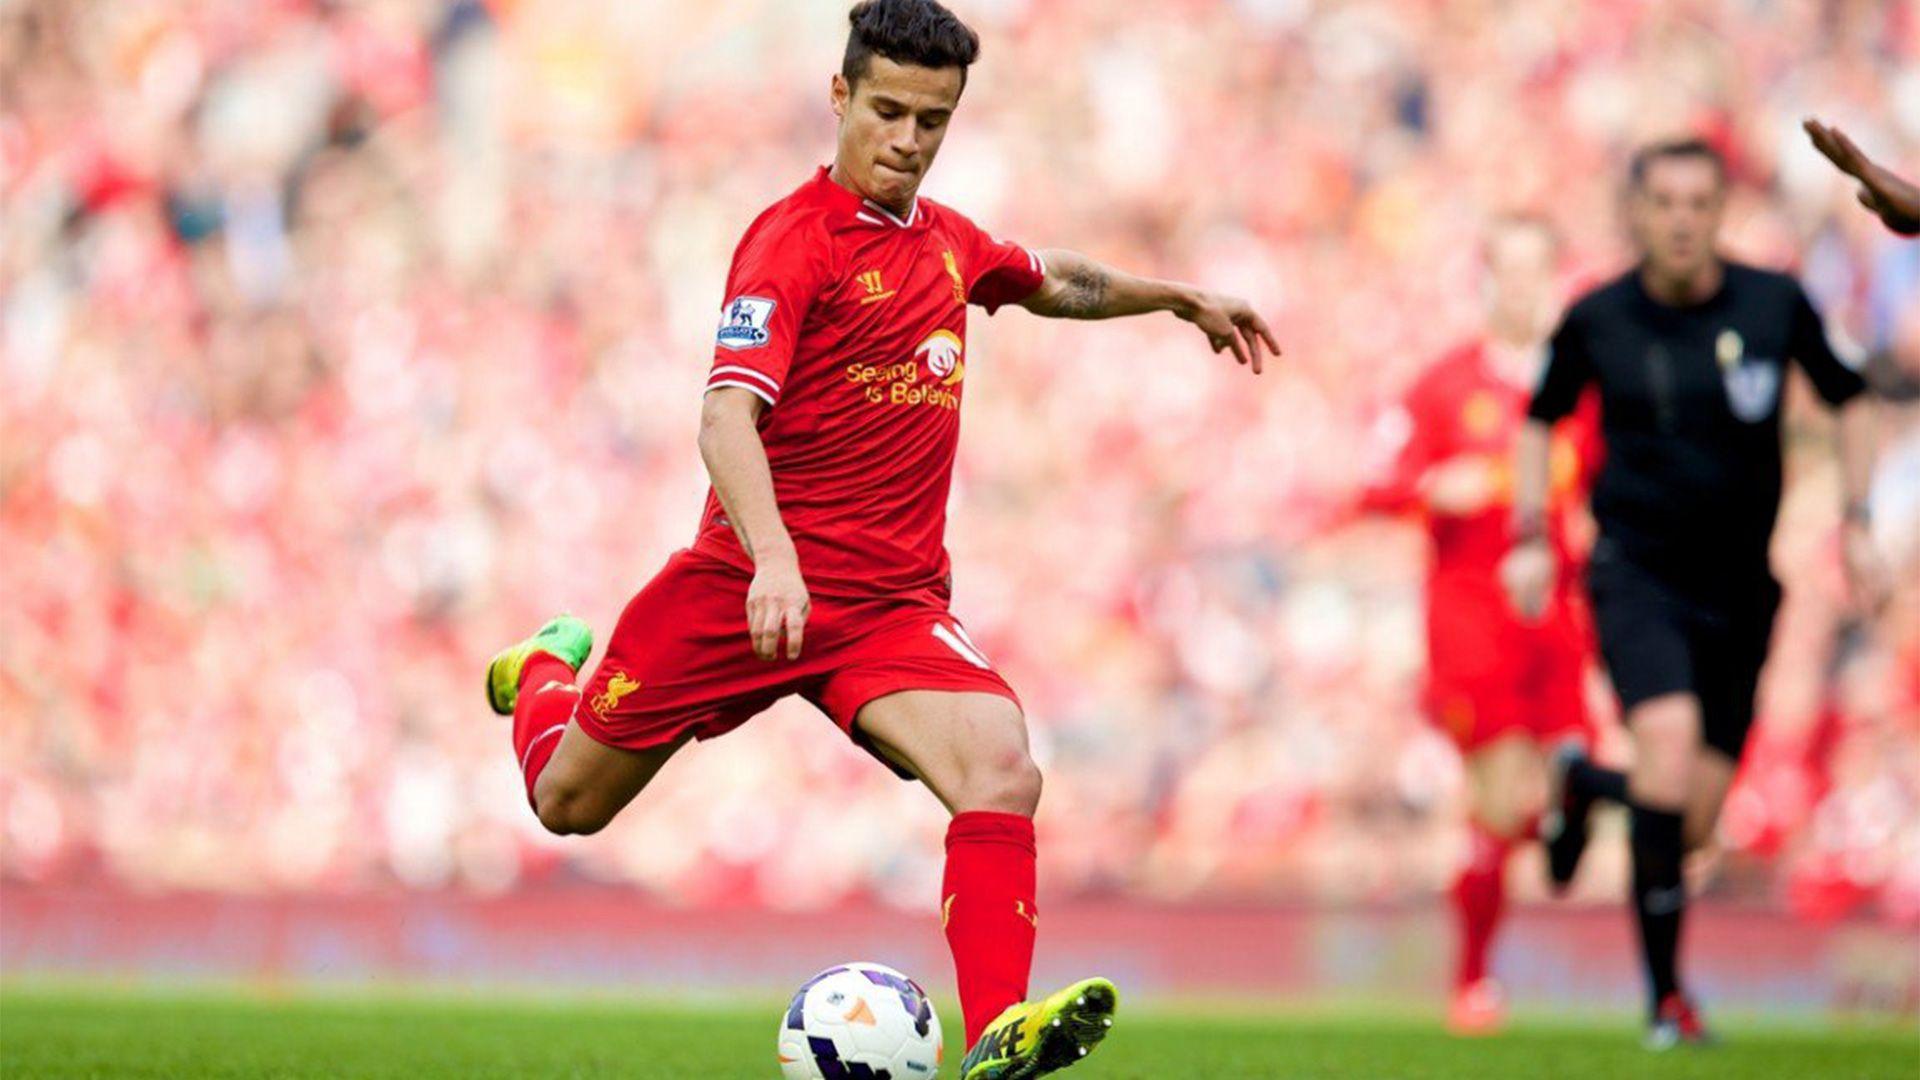 Liverpool Philippe Coutinho Kick Wallpaper: Players, Teams